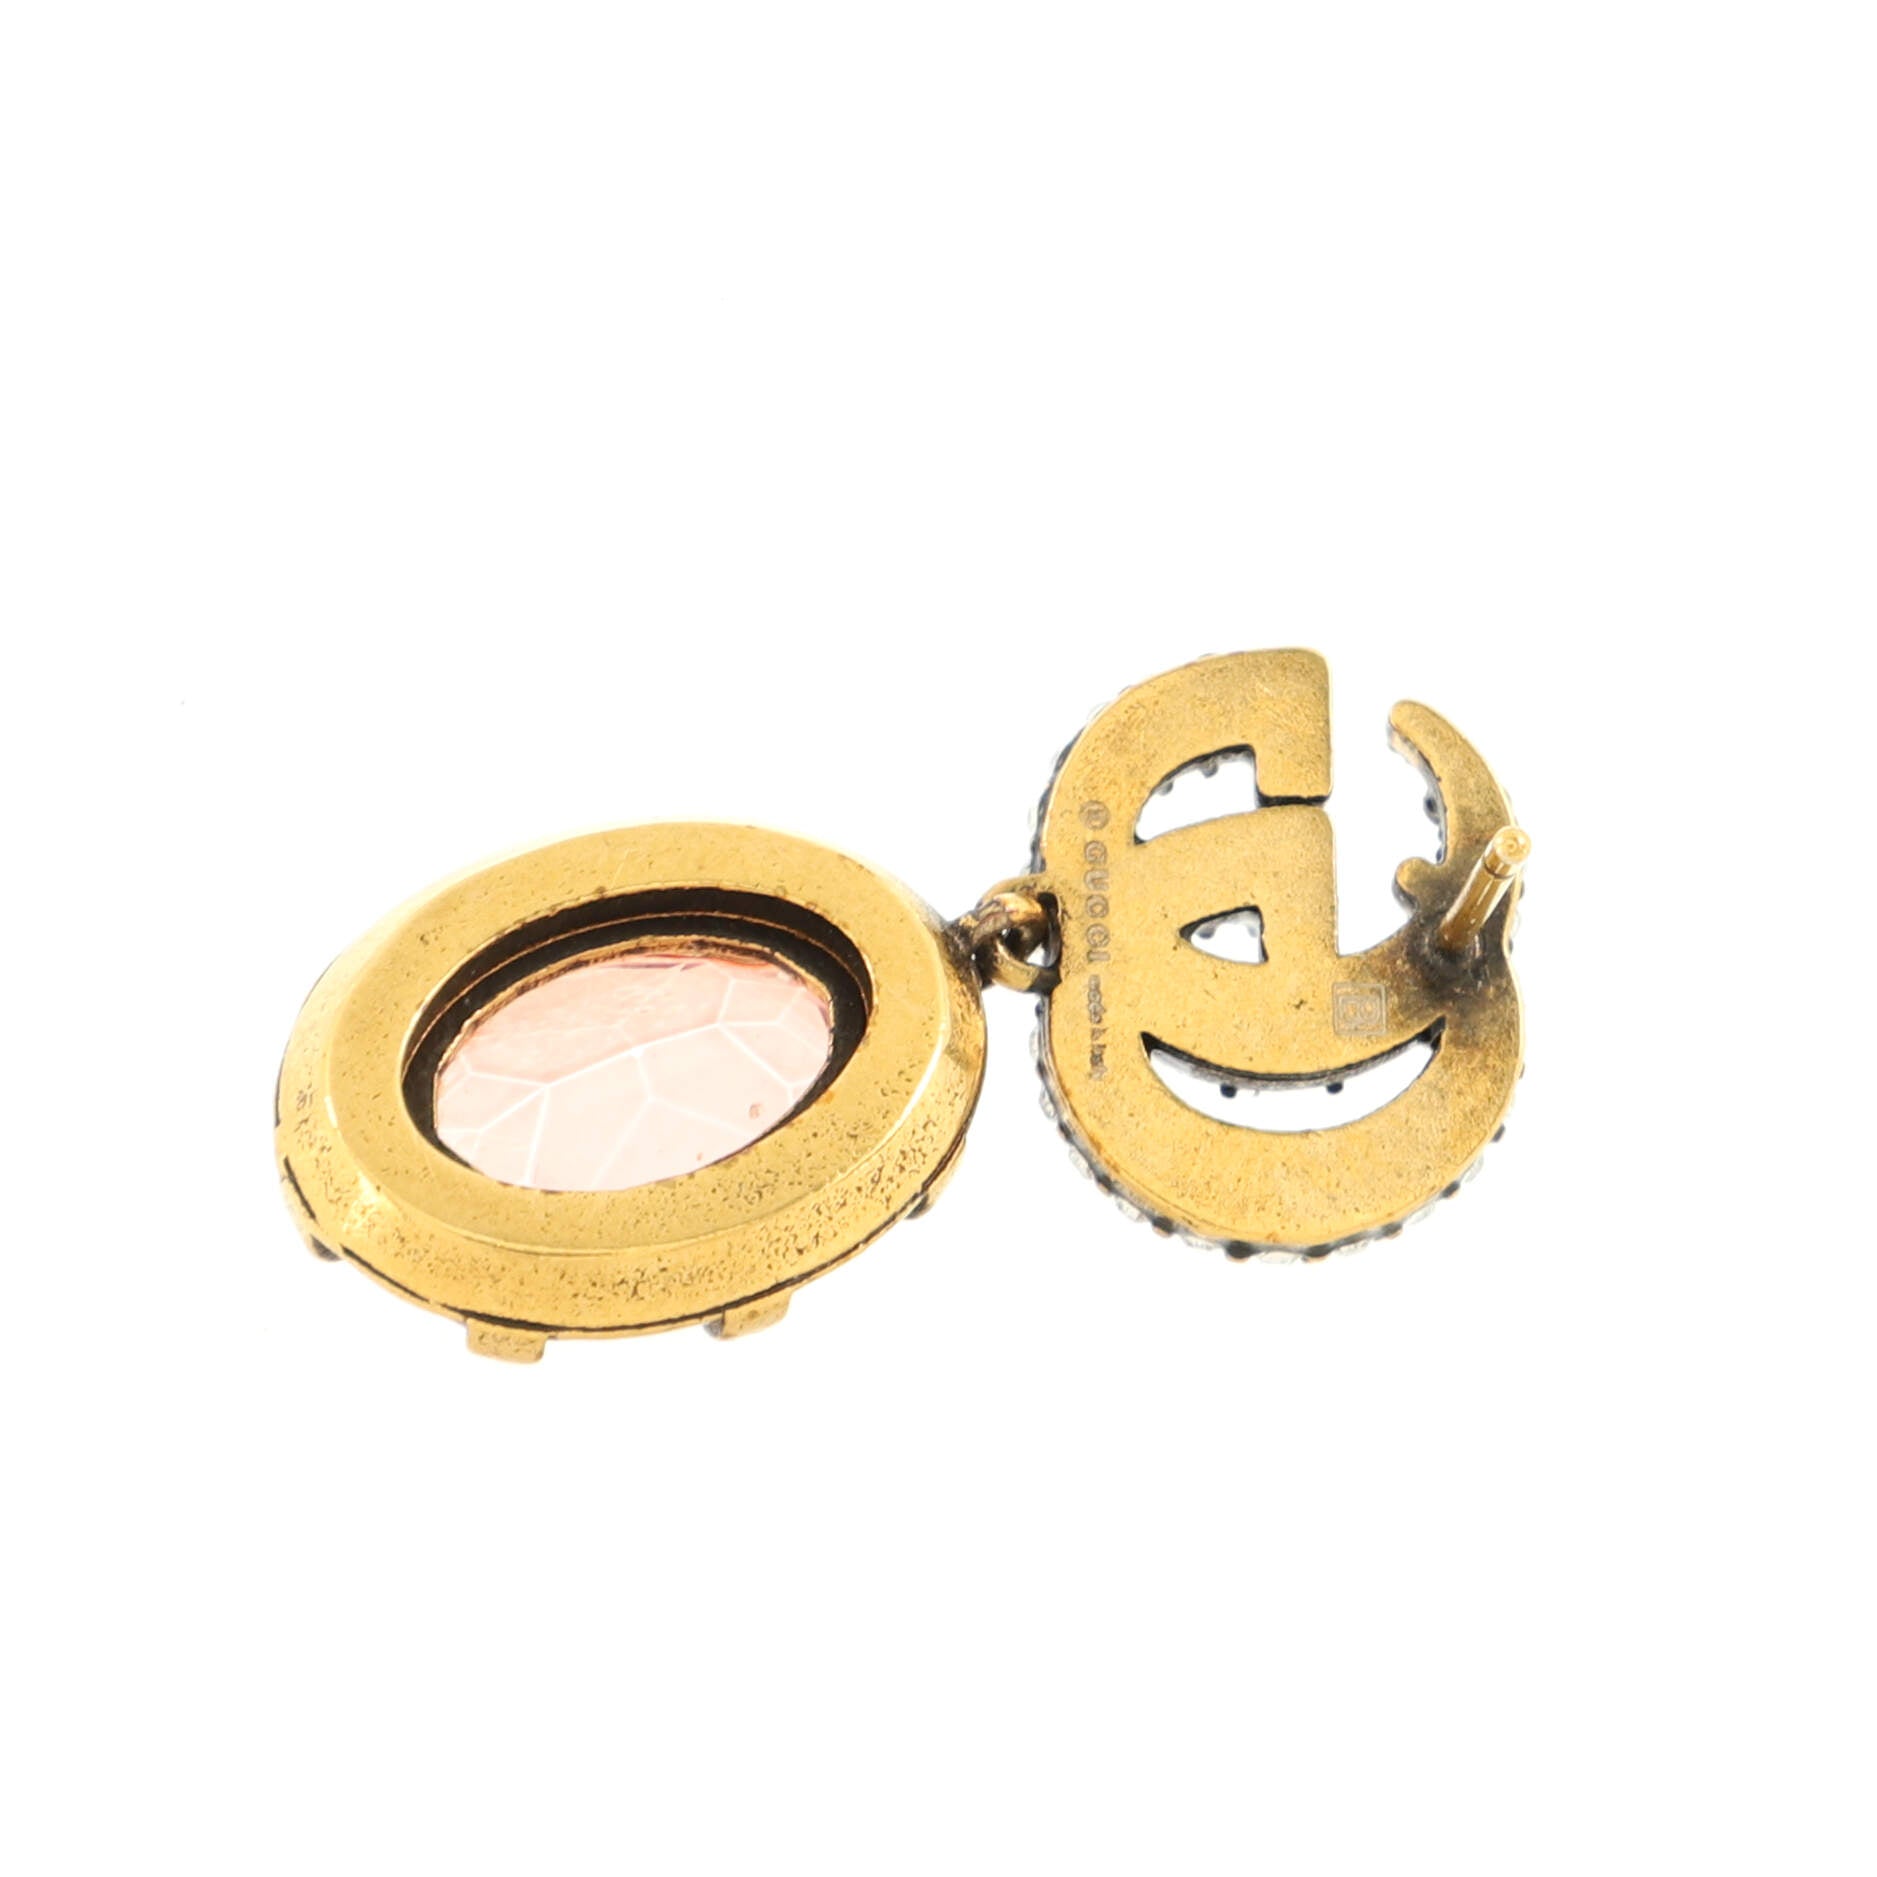 Gucci 18kt Rose Gold Flora Diamond Drop Earrings - Farfetch